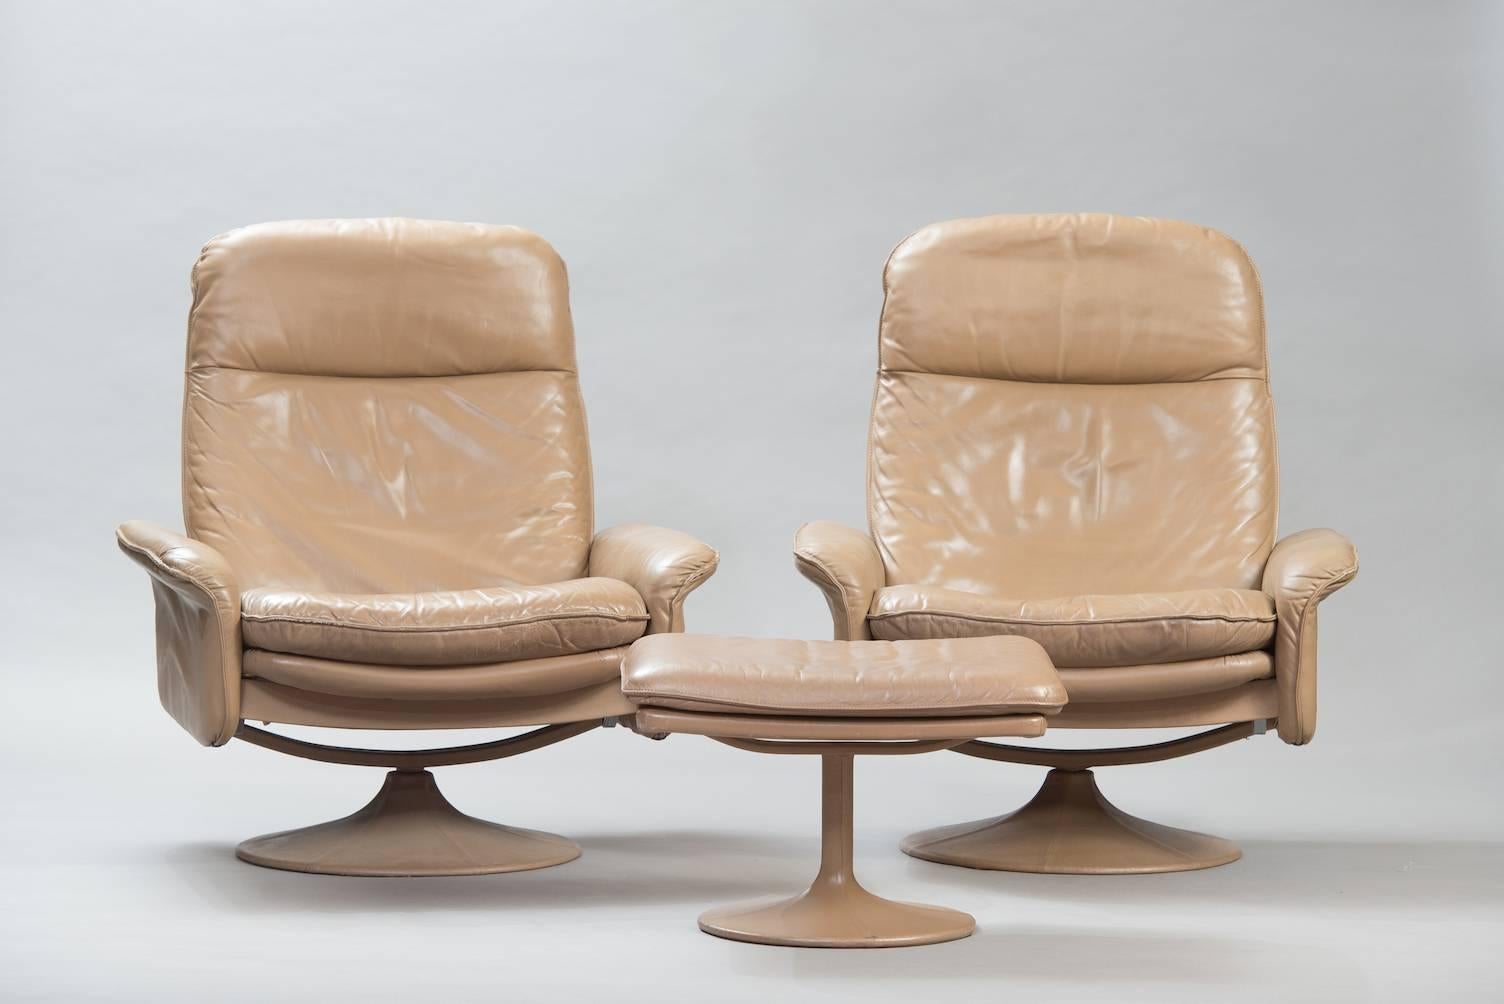 Set of two De sede reclining leather armchairs, with one ottoman, model DS-50.
Measures: Chair: H 95 cm (back), W 85 cm, D 80 cm
Ottoman: H 38 cm, L 62 cm, W 45 cm.